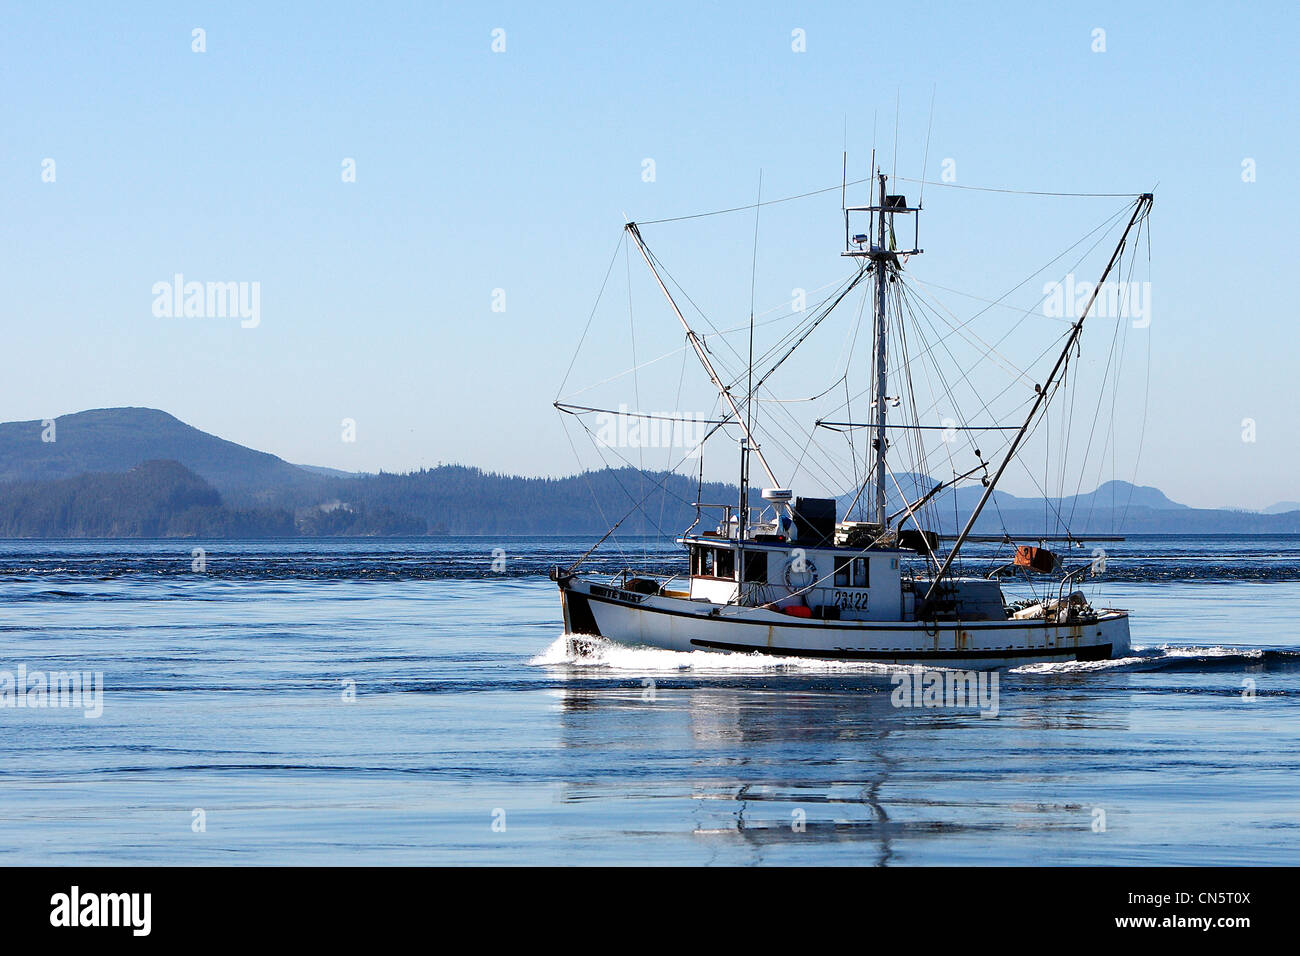 Canada, British Columbia, Salmon fishing boat in the Johnstone